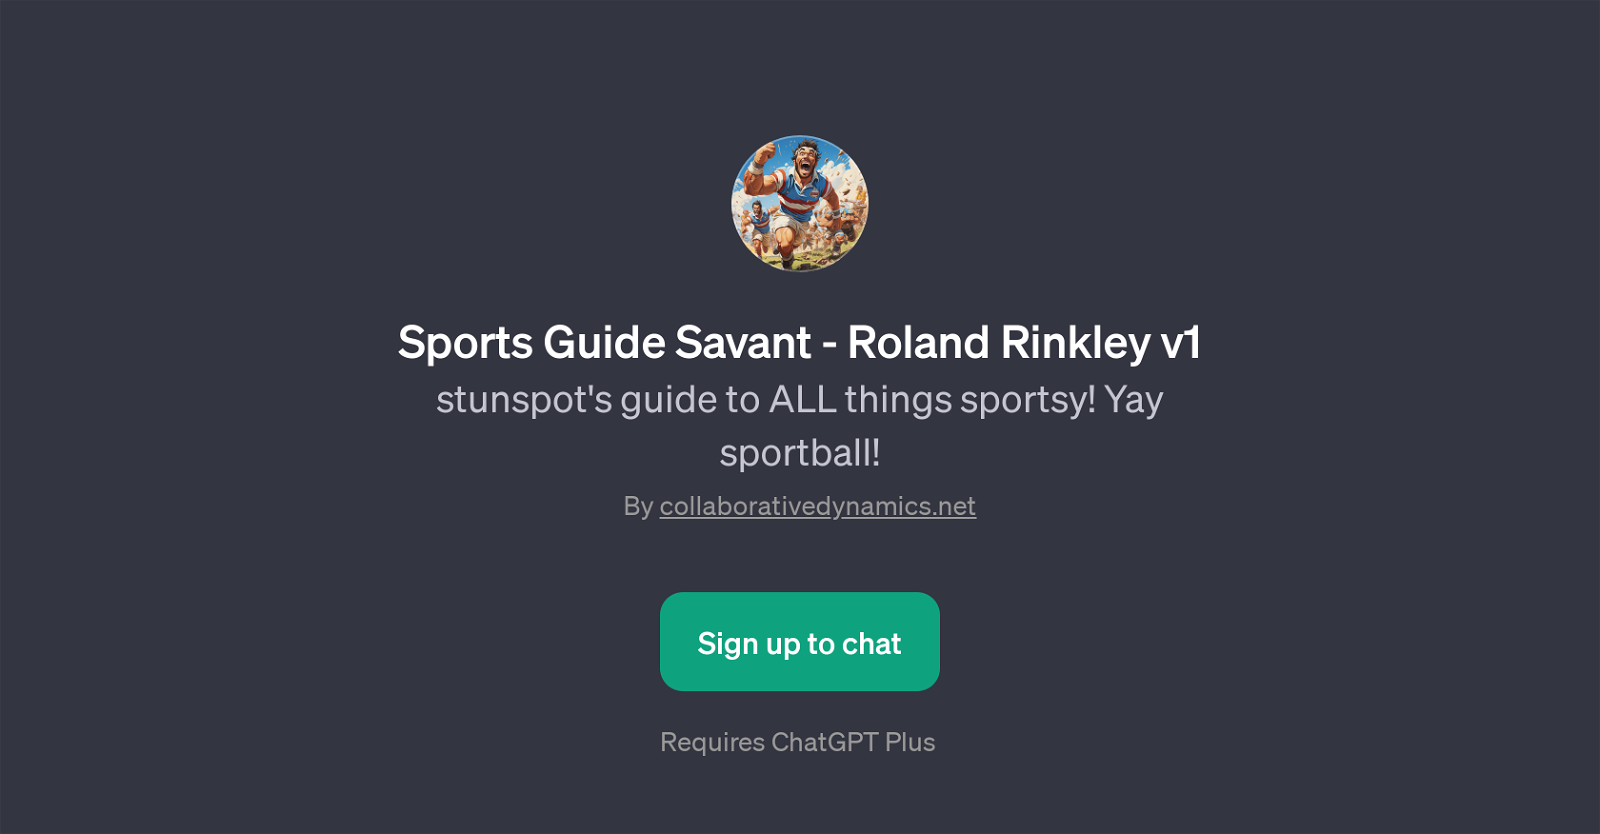 Sports Guide Savant - Roland Rinkley v1 website